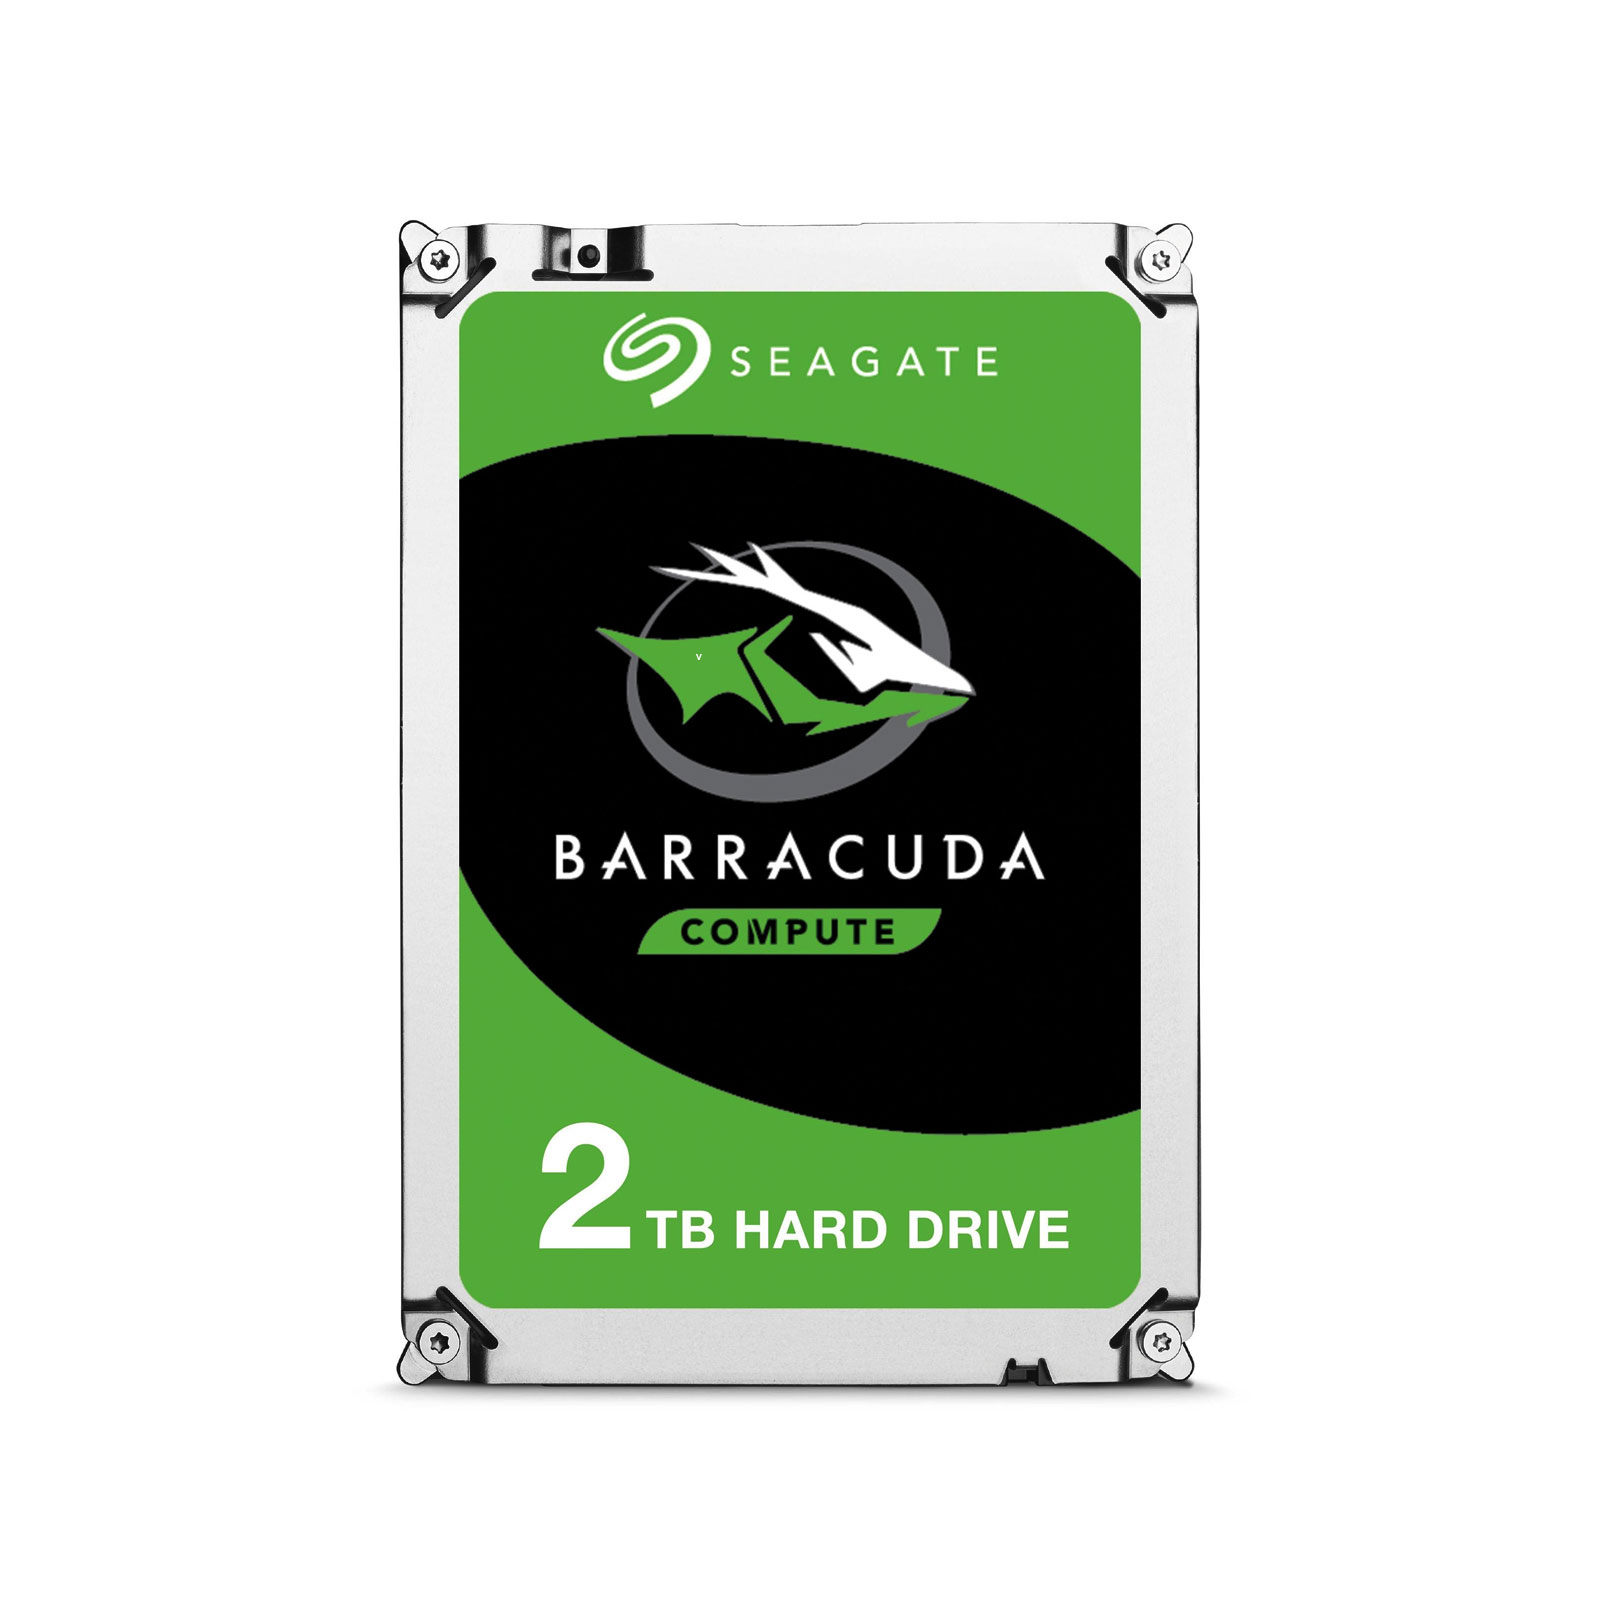 Seagate Barracuda ST2000DM008 3,5" 2TB Serial ATA III Interne HDD-Festplatte